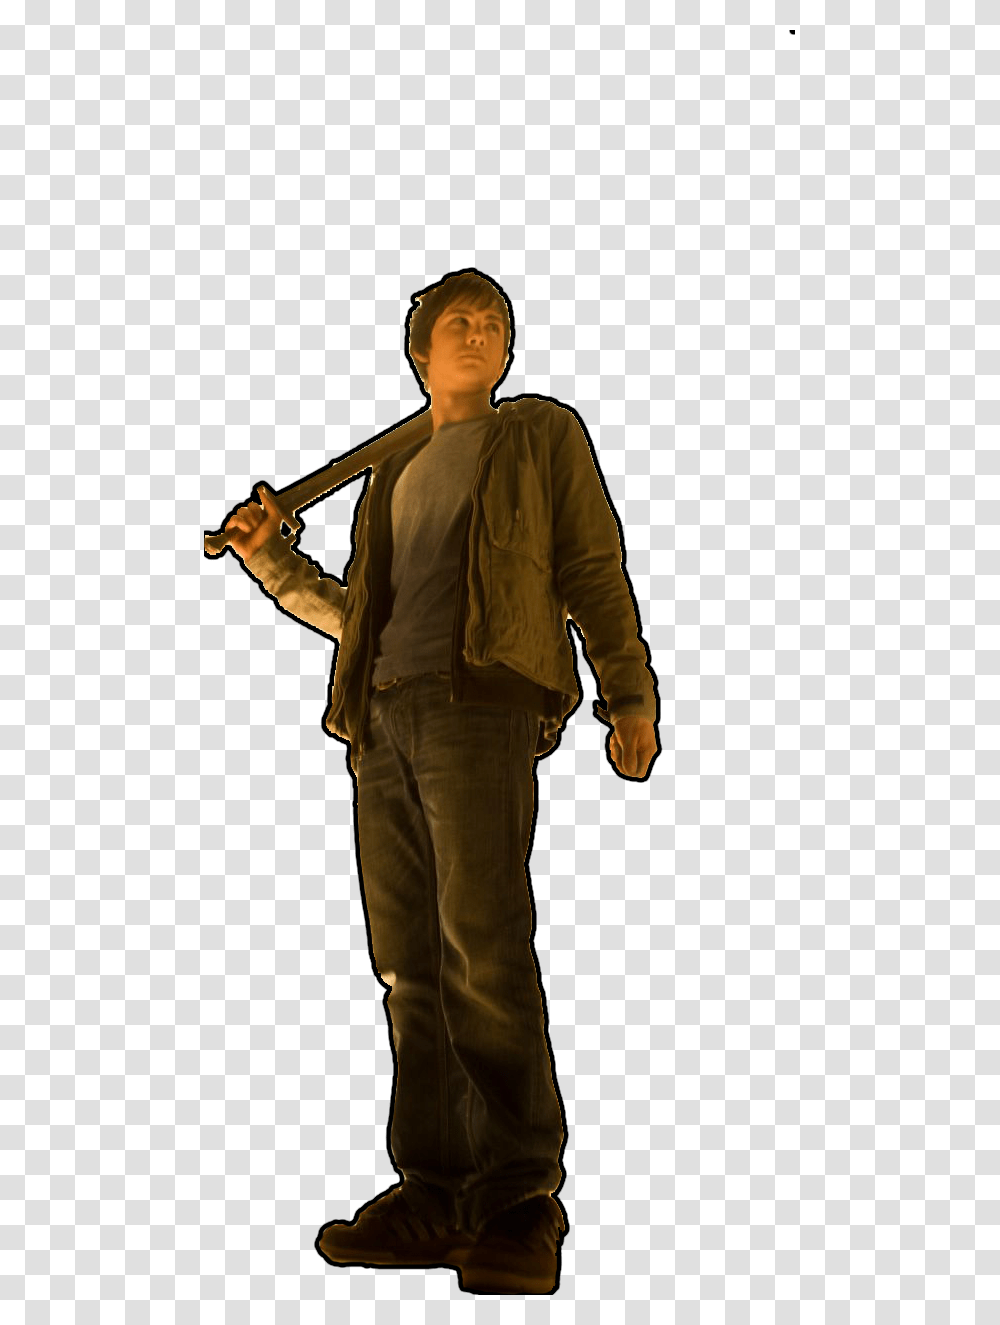 Logan Lerman As Percy Jackson Download Logan Lerman As Percy Jackson, Person, Sleeve, Tool Transparent Png